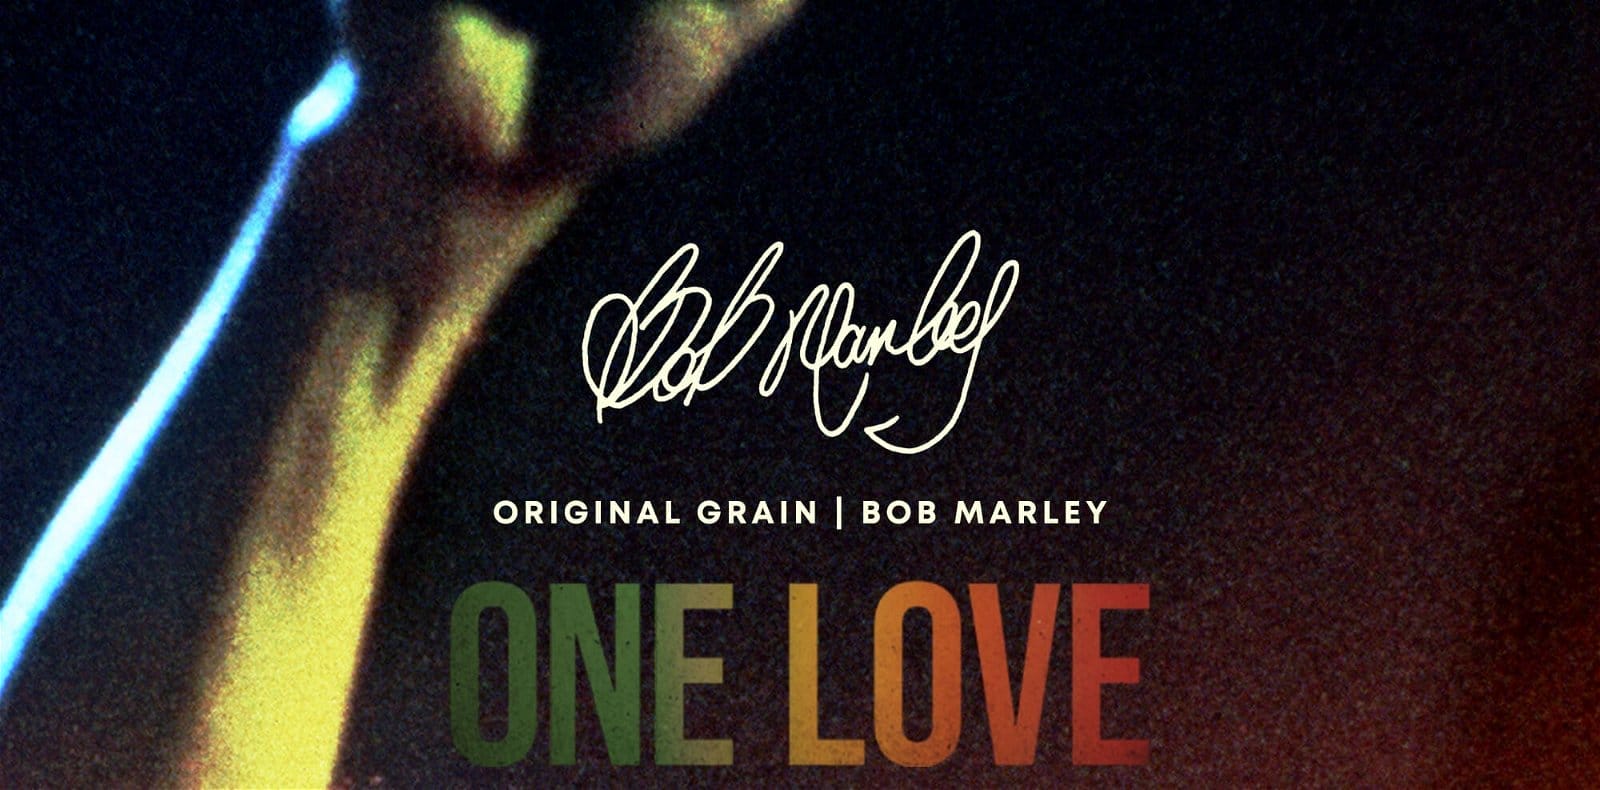 Original Grain x Bob Marley One Love Timepiece Collection Coming Soon